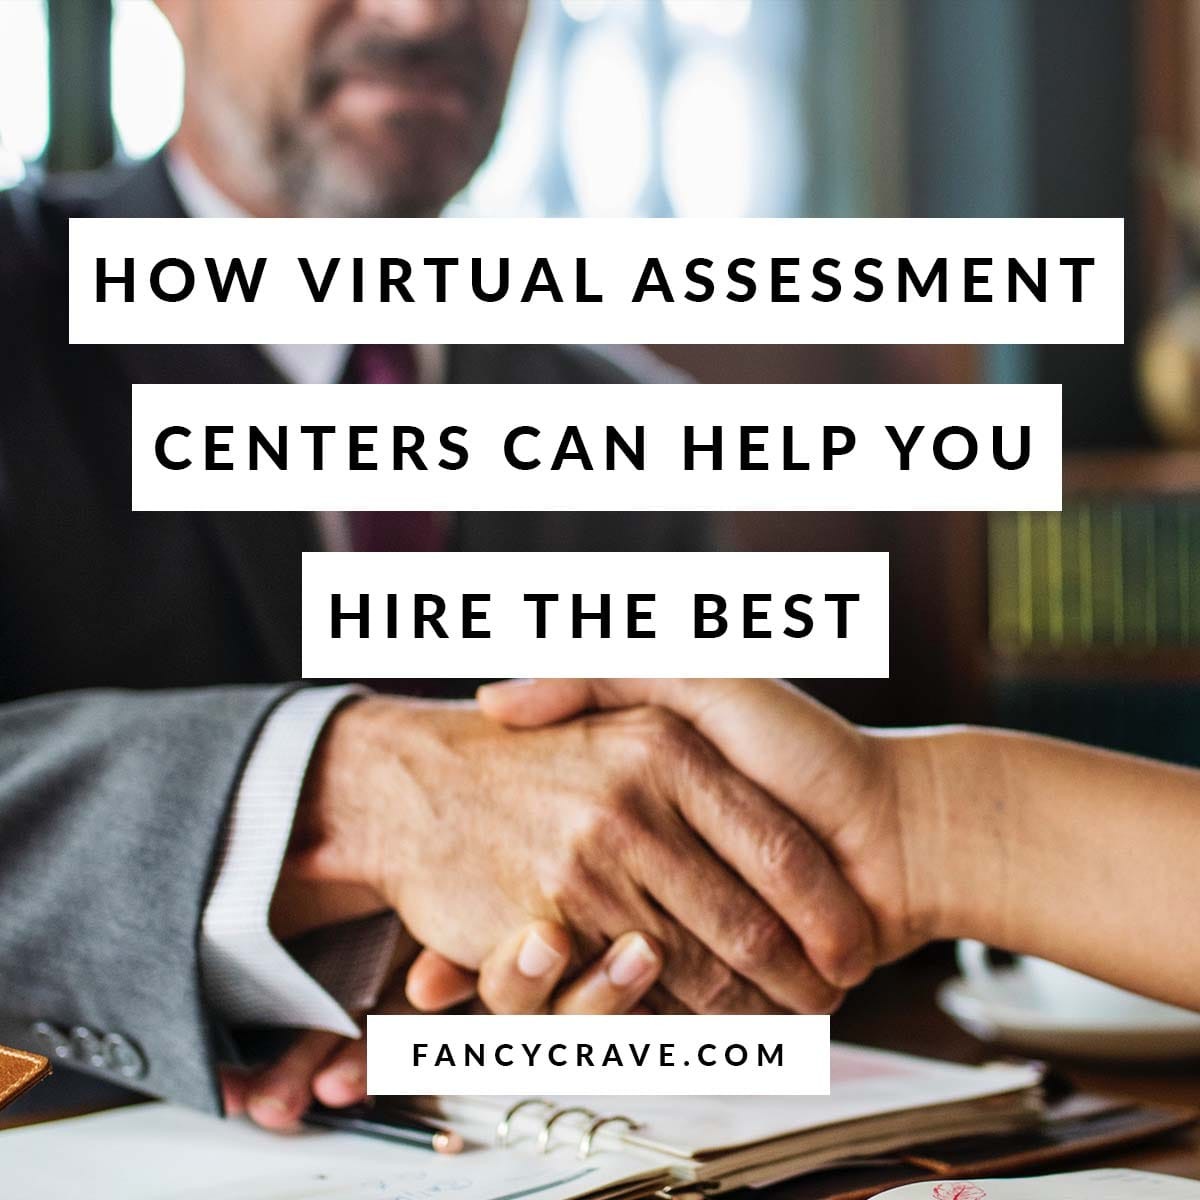 Virtual assessment